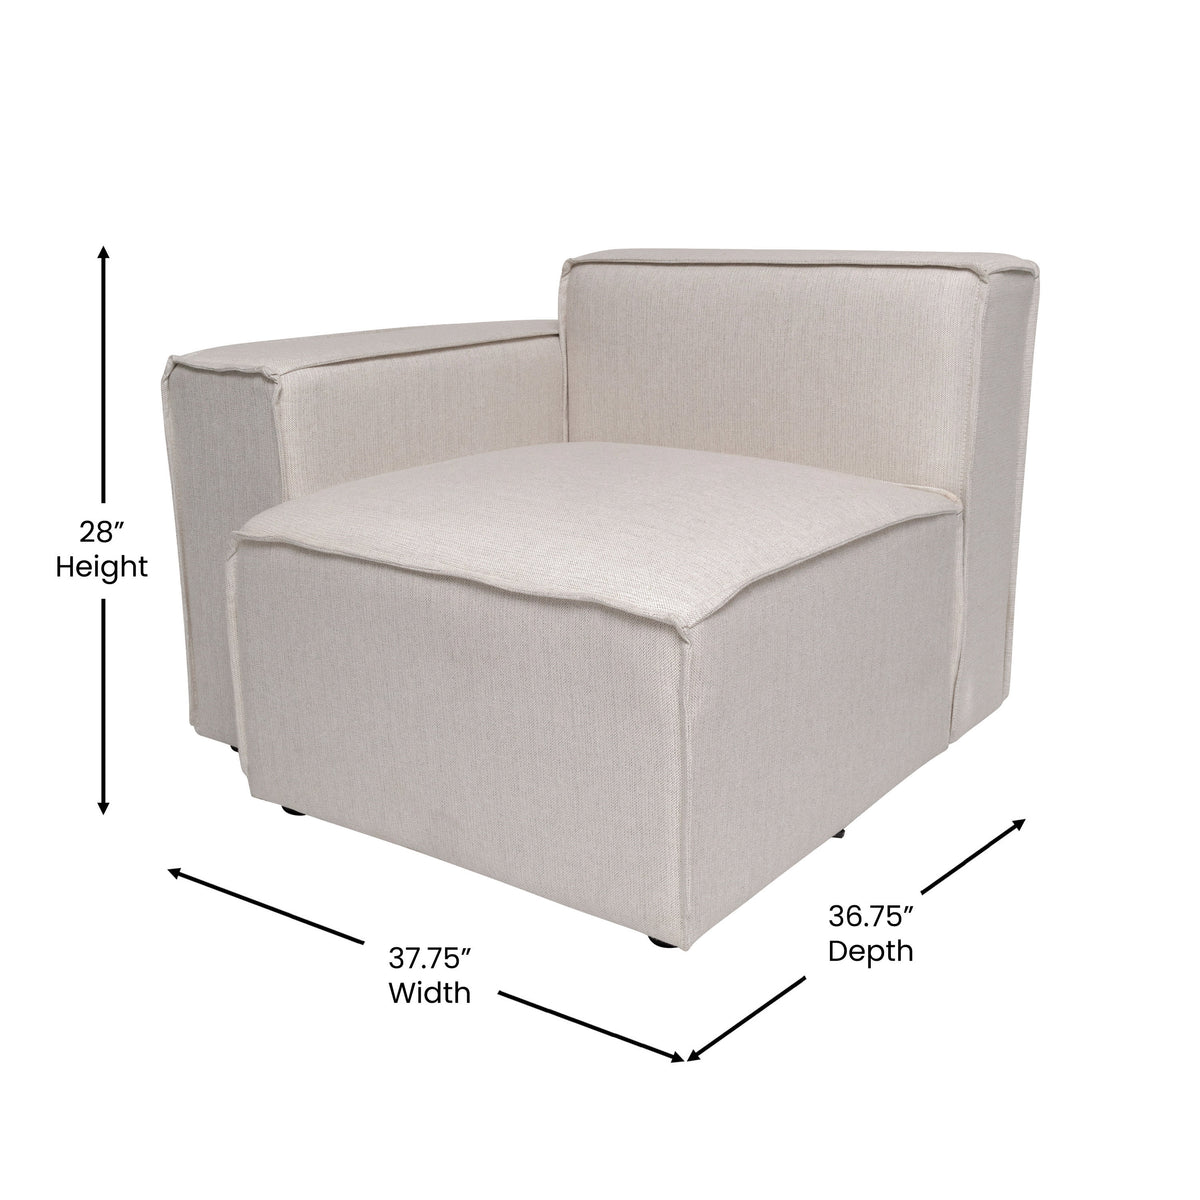 Cream |#| Contemporary Modular Sectional Sofa Left Side Chair with Armrest - Cream Fabric